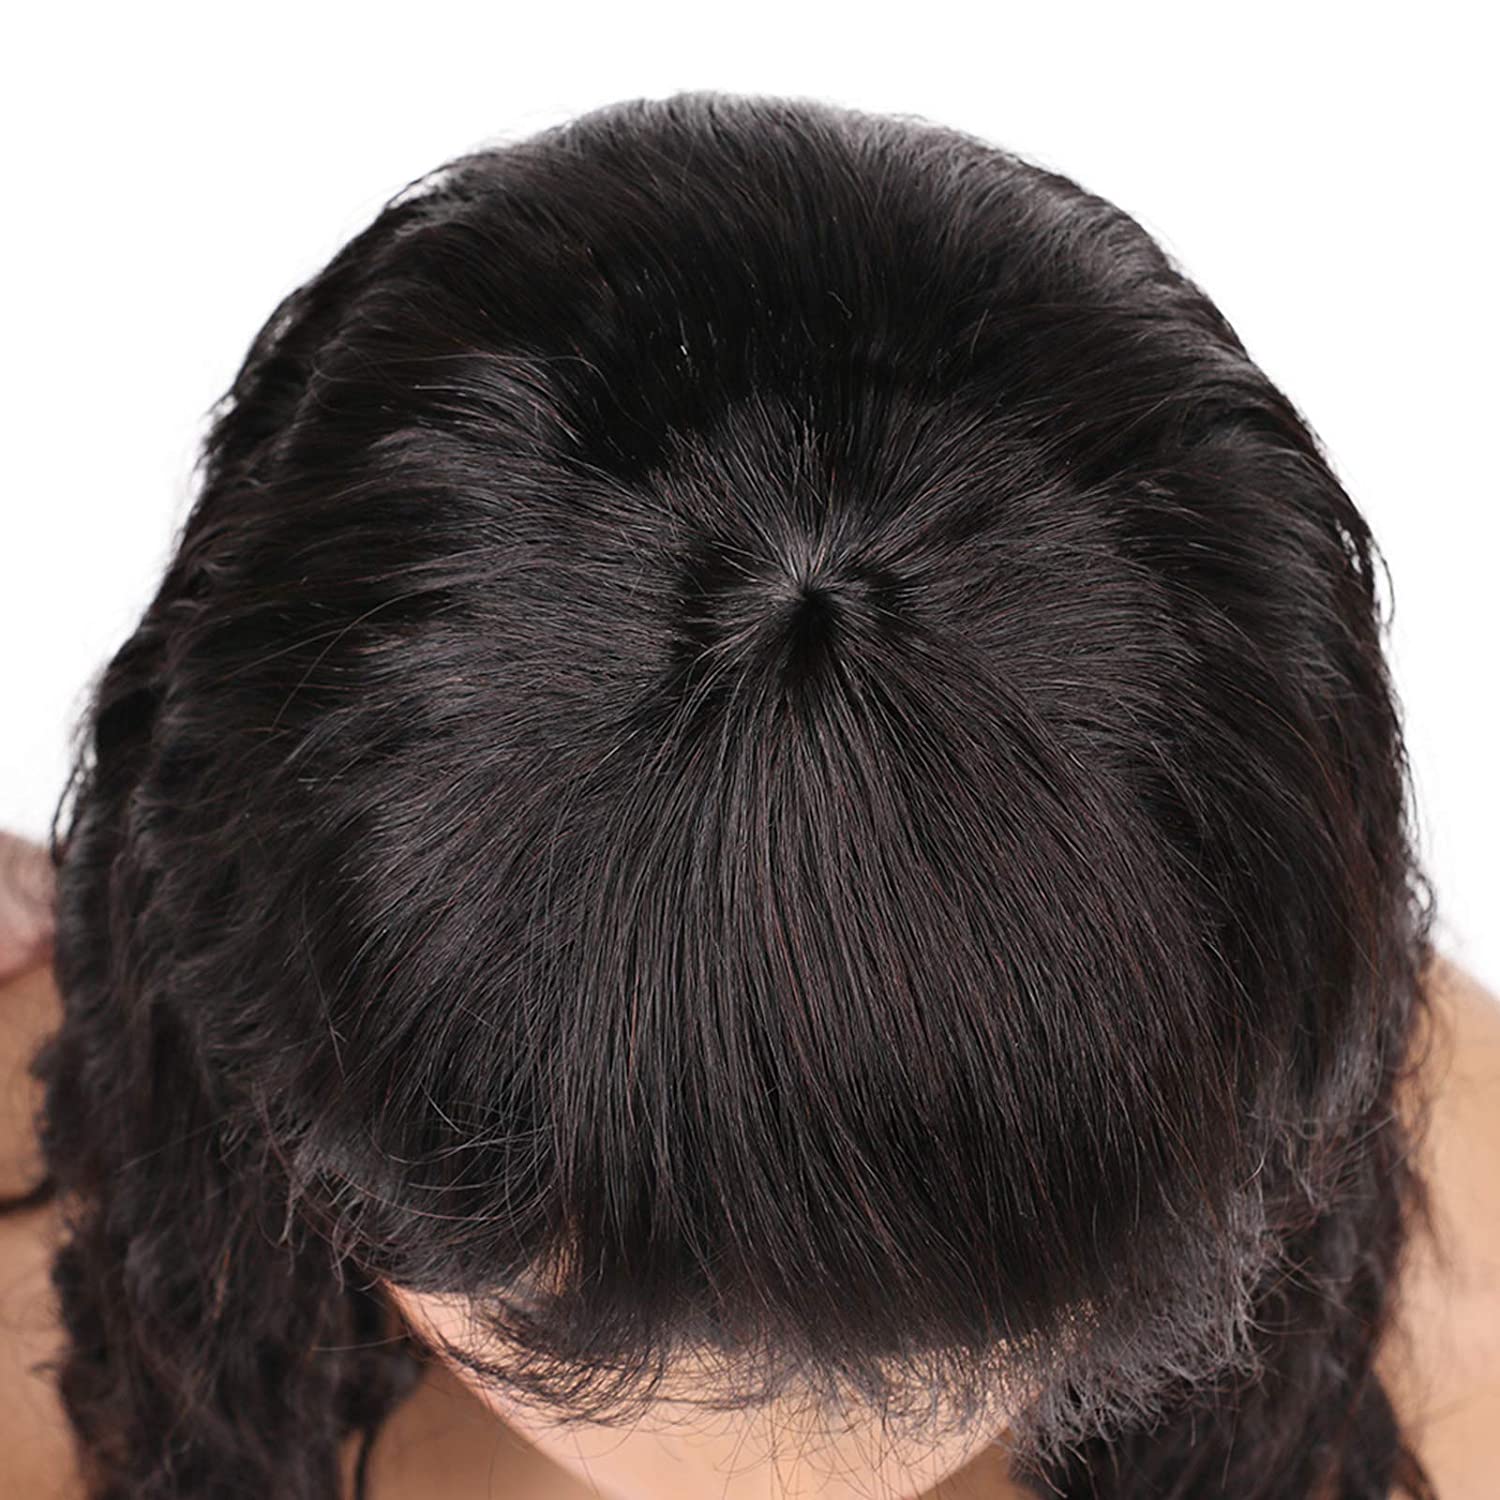 Gluna Hair Bob Wigs with Bangs Brazilian Body Wave Virgin Human Hair Wigs Glueless Silky Machine Made Wigs for Black Women Natural Color